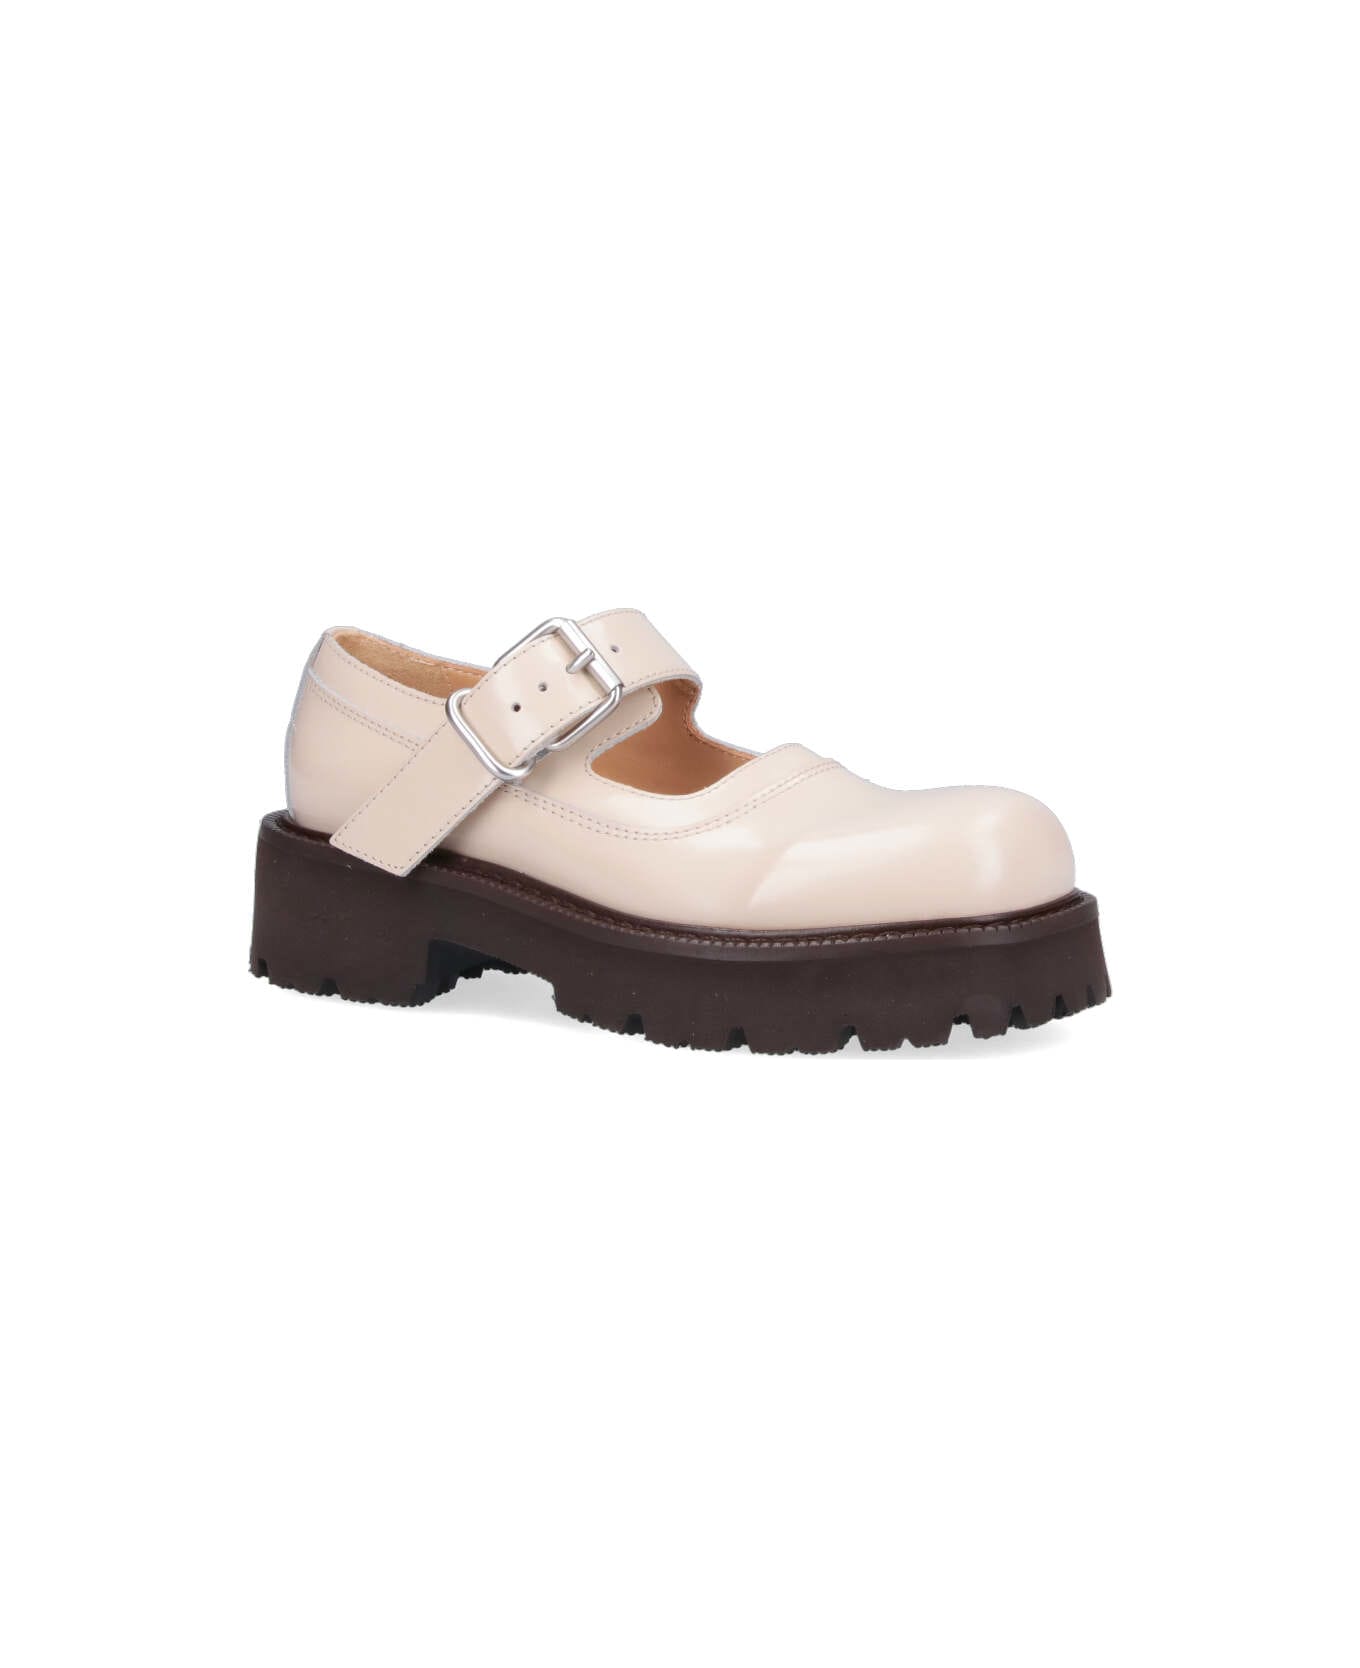 MM6 Maison Margiela Flat Shoes - Cream ハイヒール